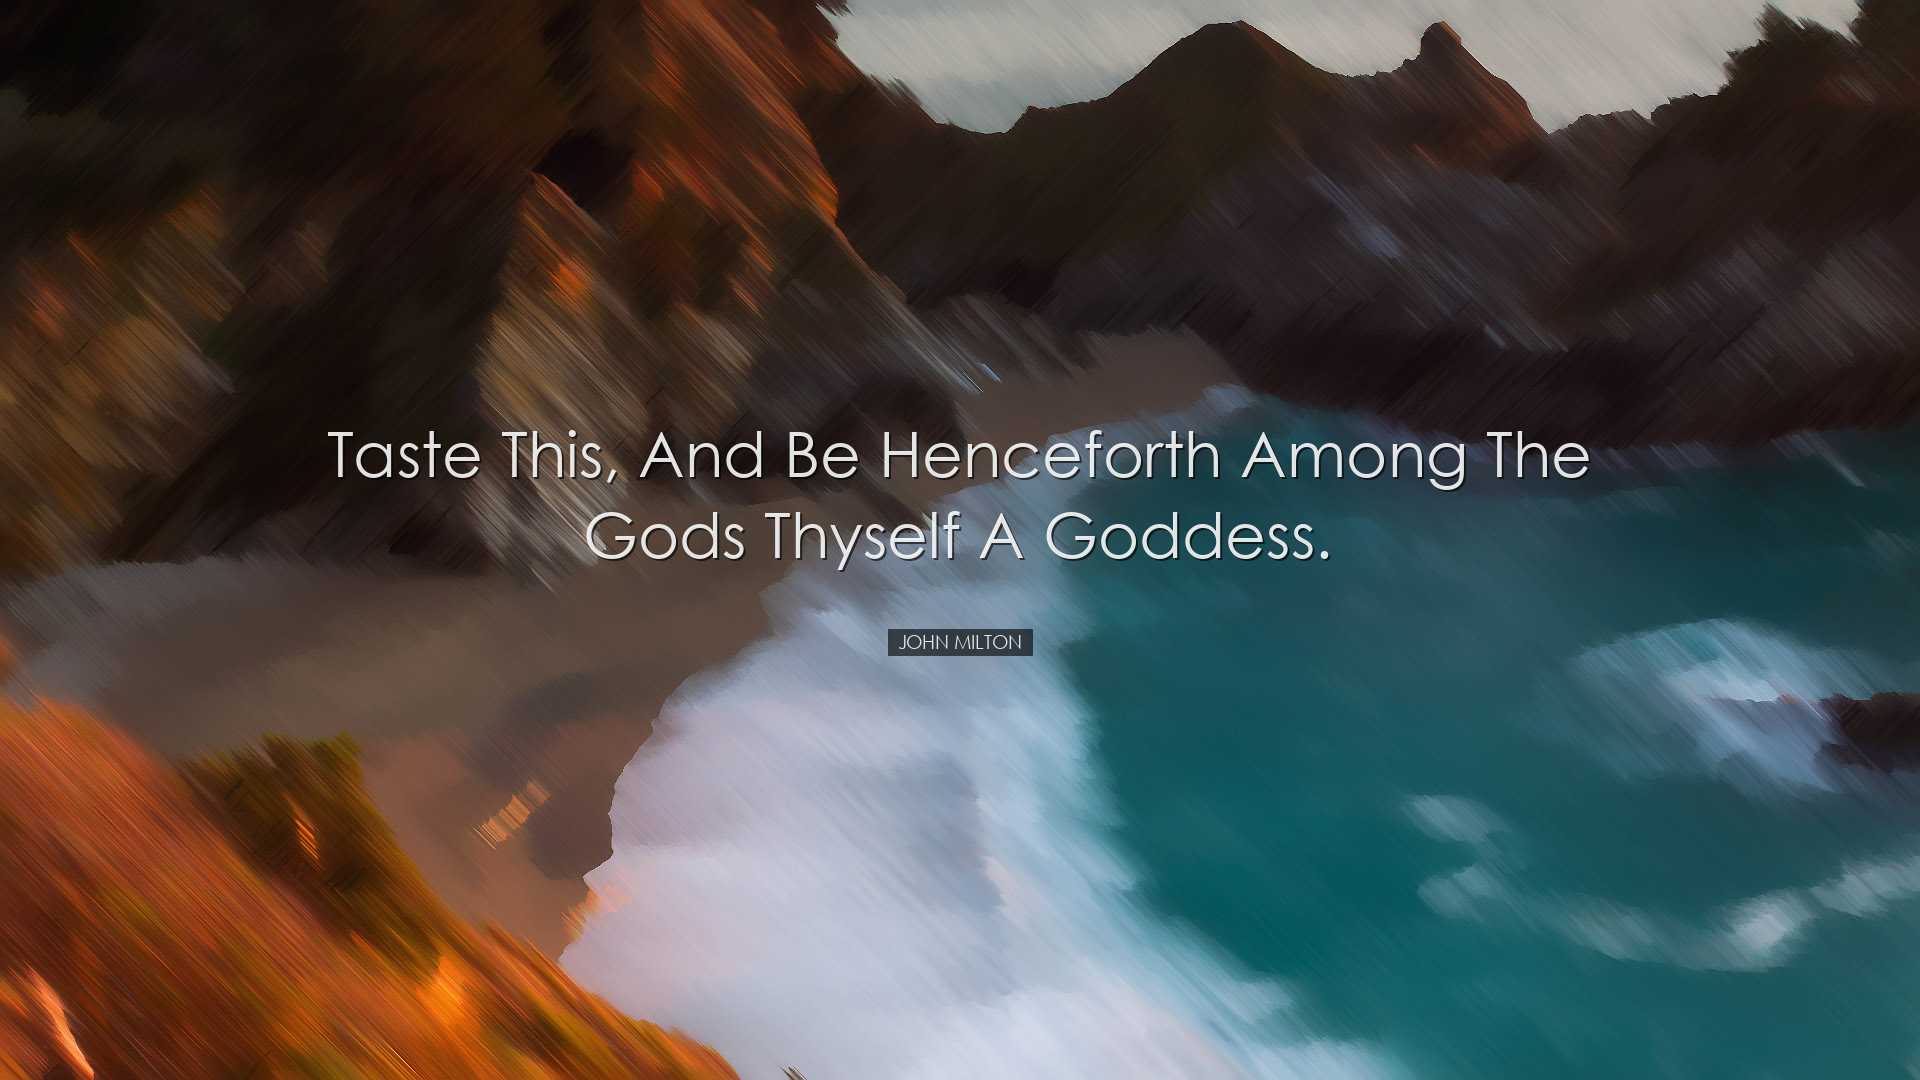 Taste this, and be henceforth among the Gods thyself a Goddess. -